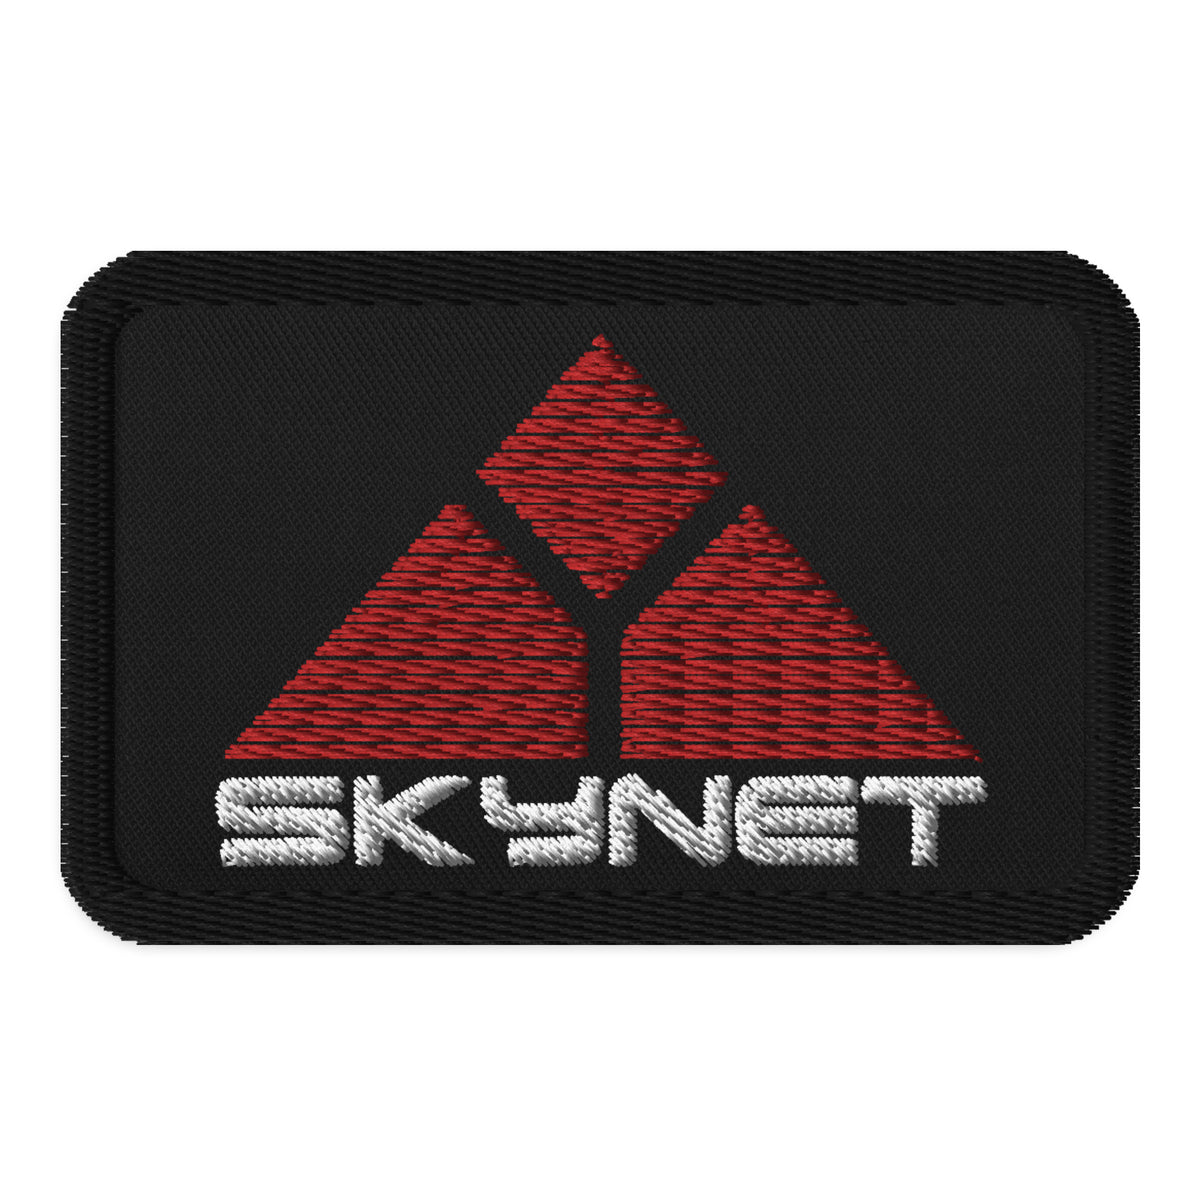 Skynet Cyberdyne Systems Security Force Patch